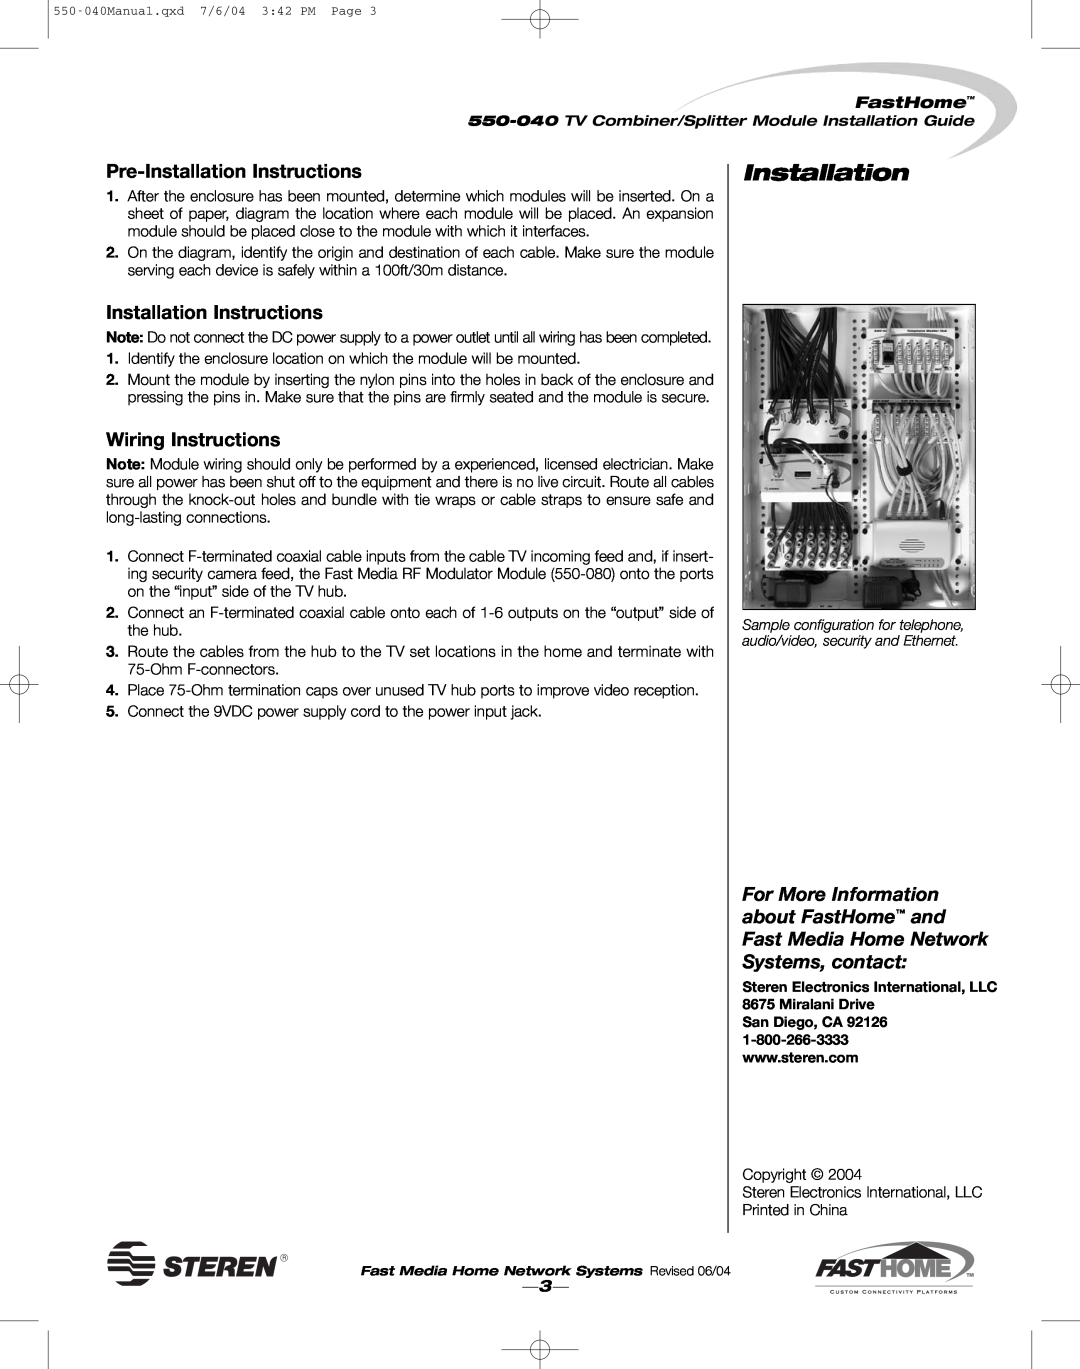 Steren 550-040 manual Pre-InstallationInstructions, Installation Instructions, Wiring Instructions, FastHome 